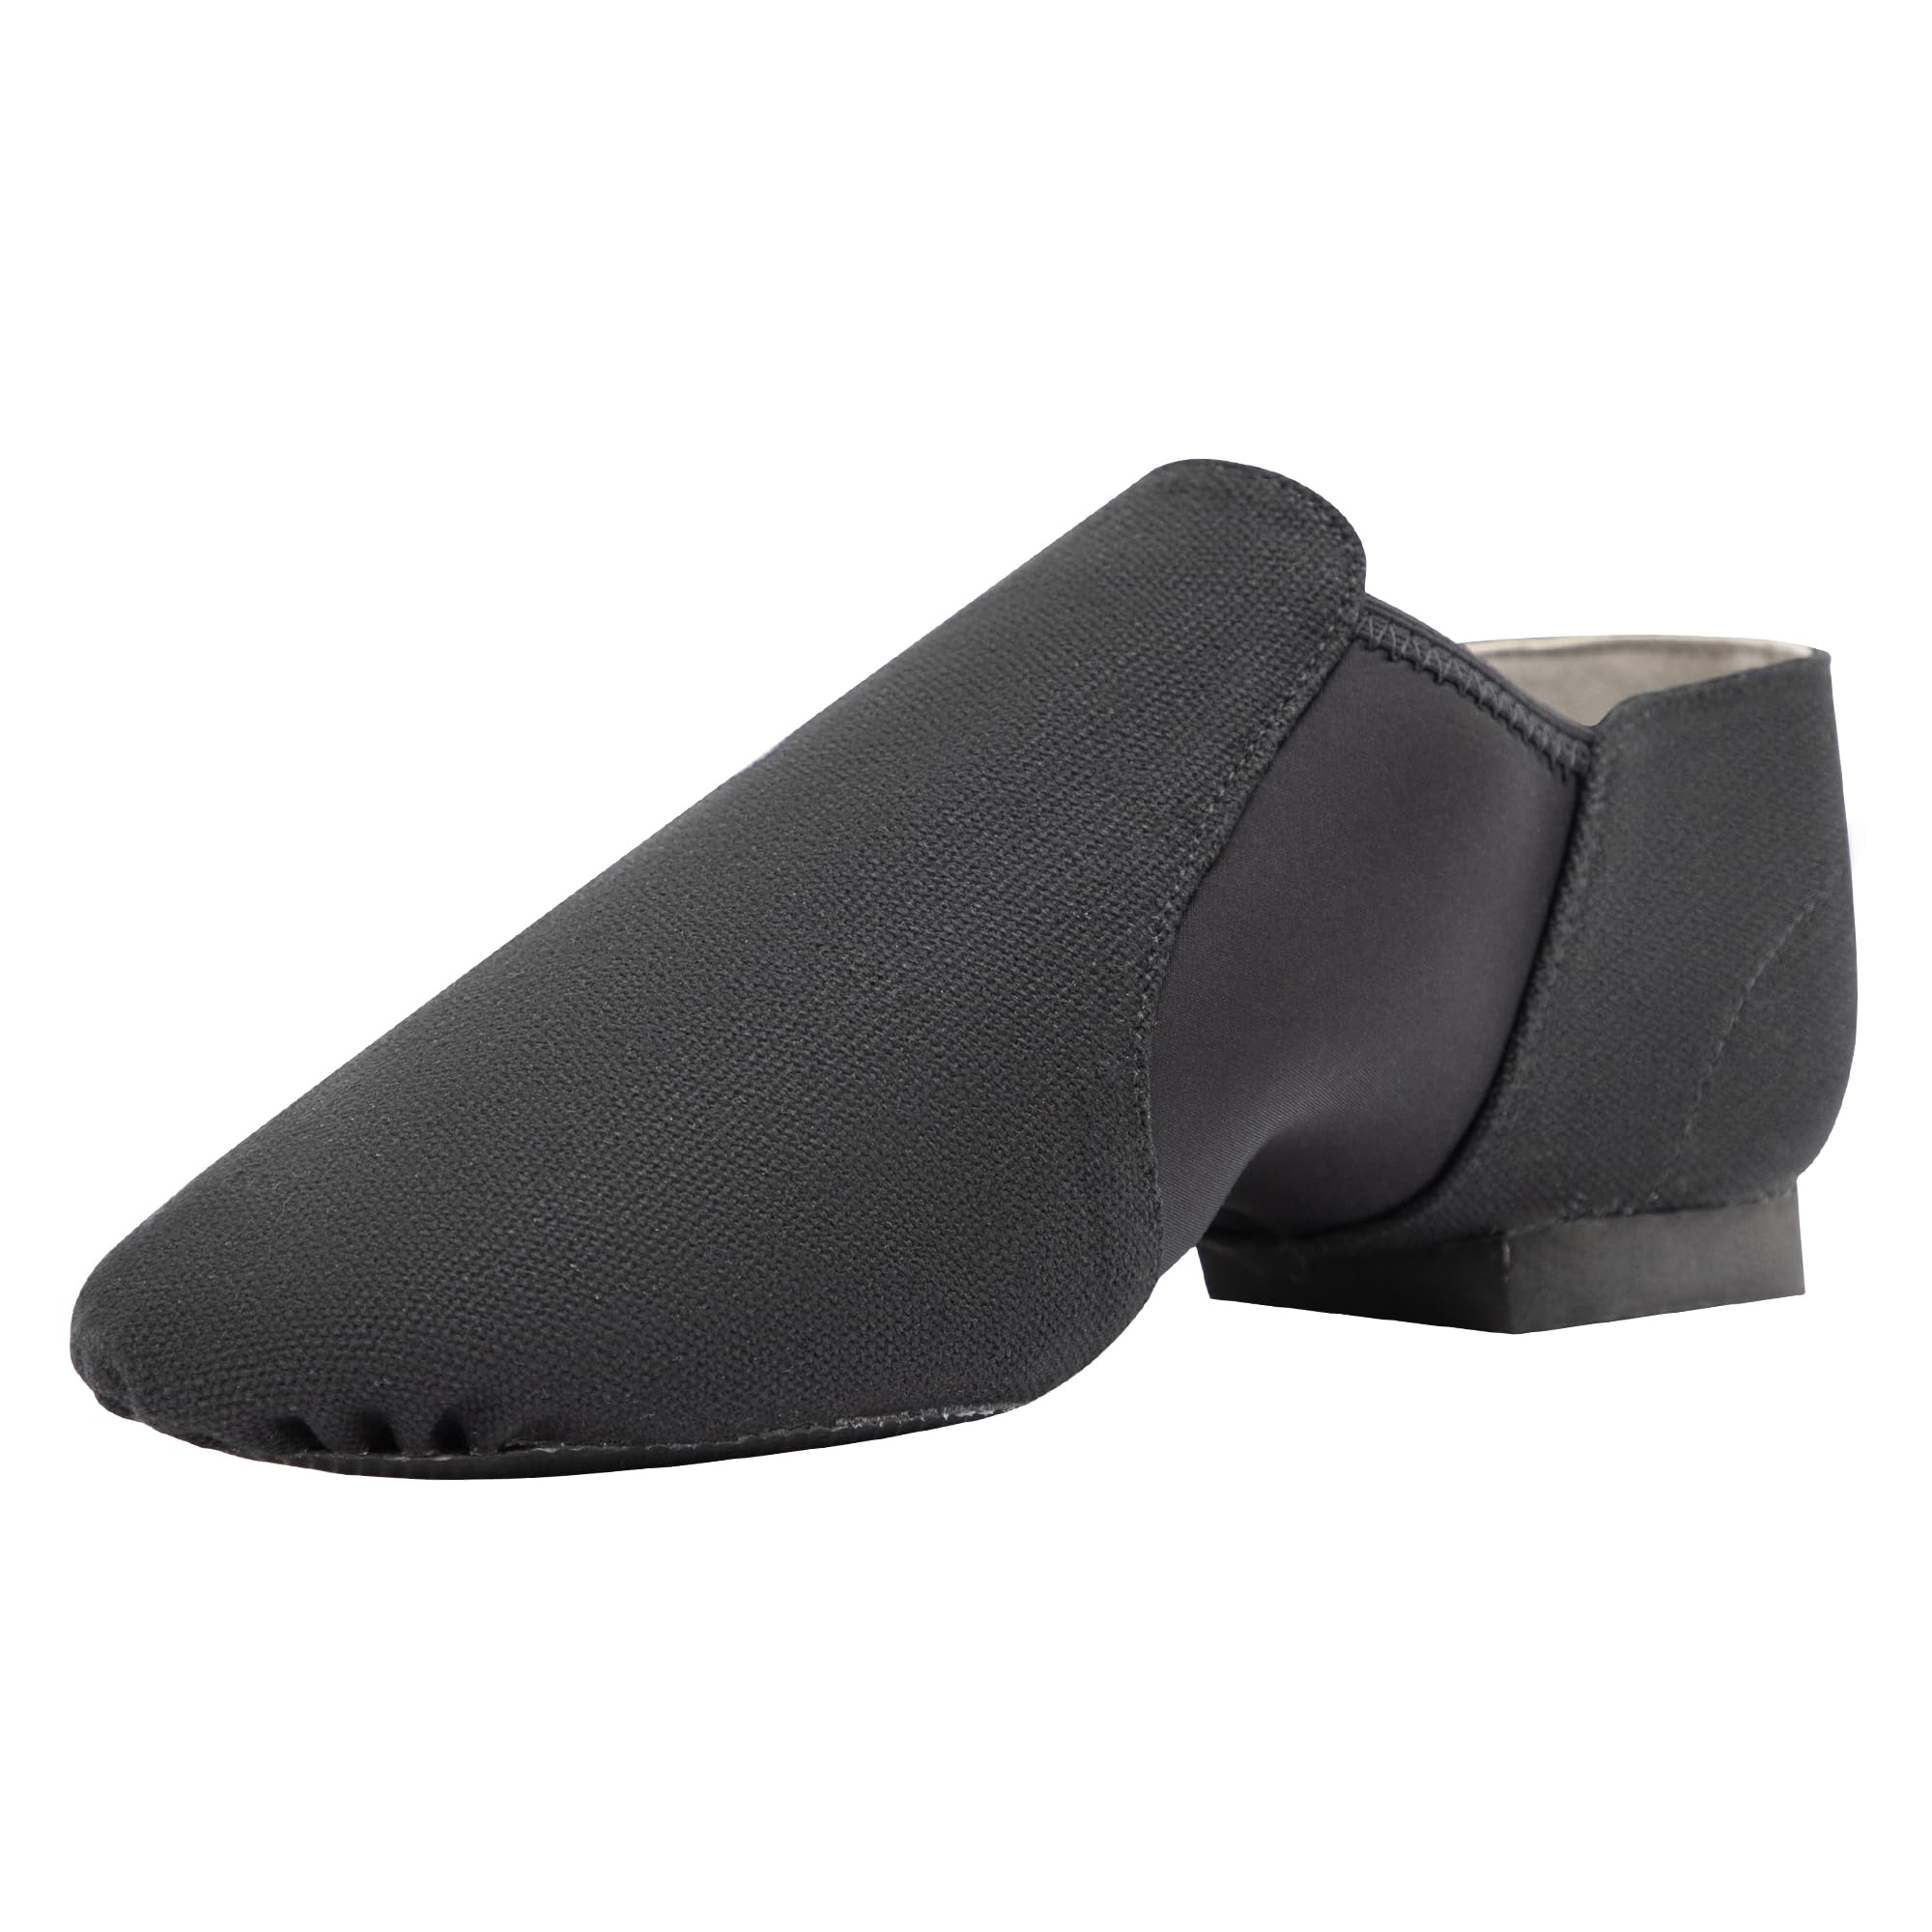 Linodes Unisex 09 Canvas Upper Slip-on Jazz Shoe for Women and Men's Dance Shoes-Black 8M